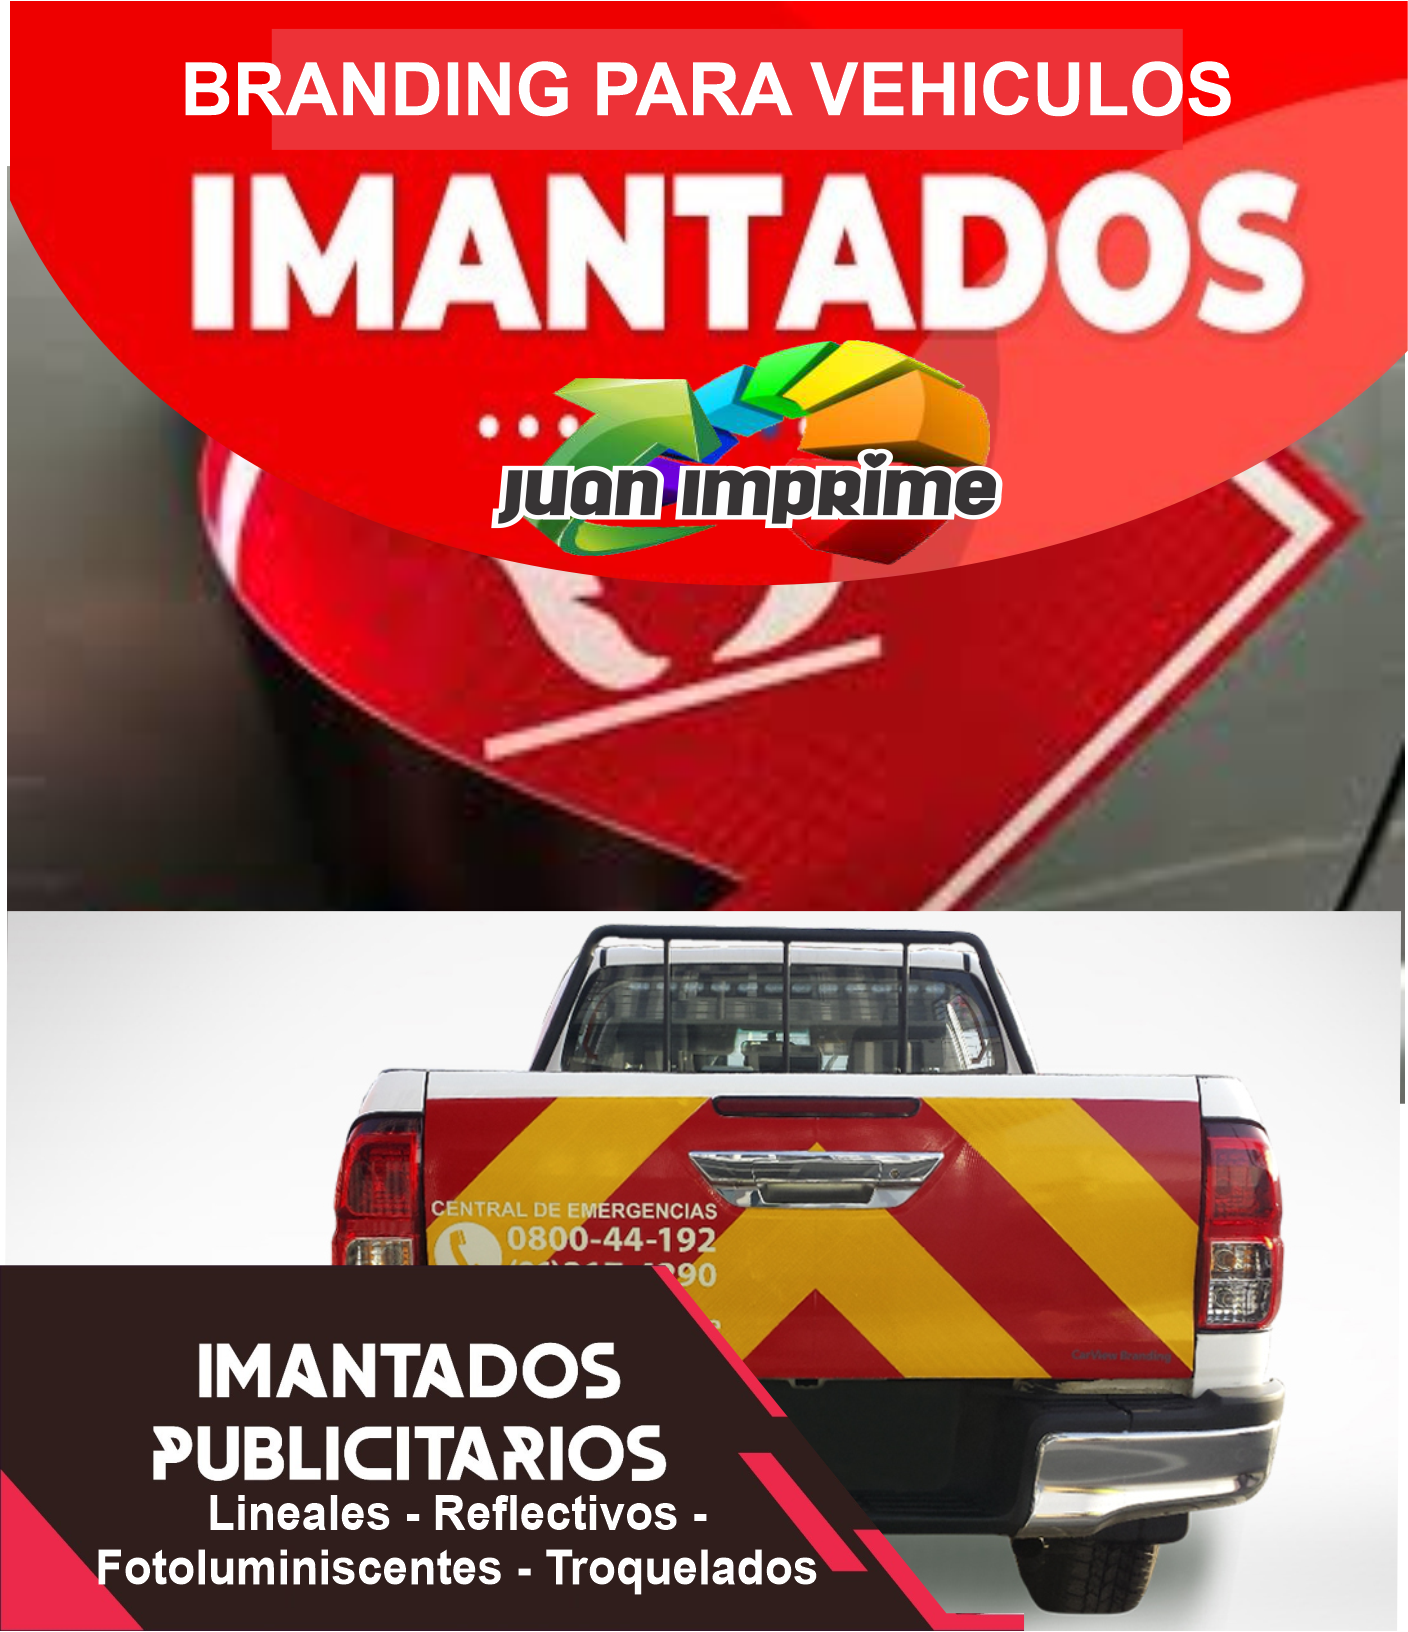 Juanimprime; Fabrica imanes publicitarios vehiculares. Envios a toda Colombia